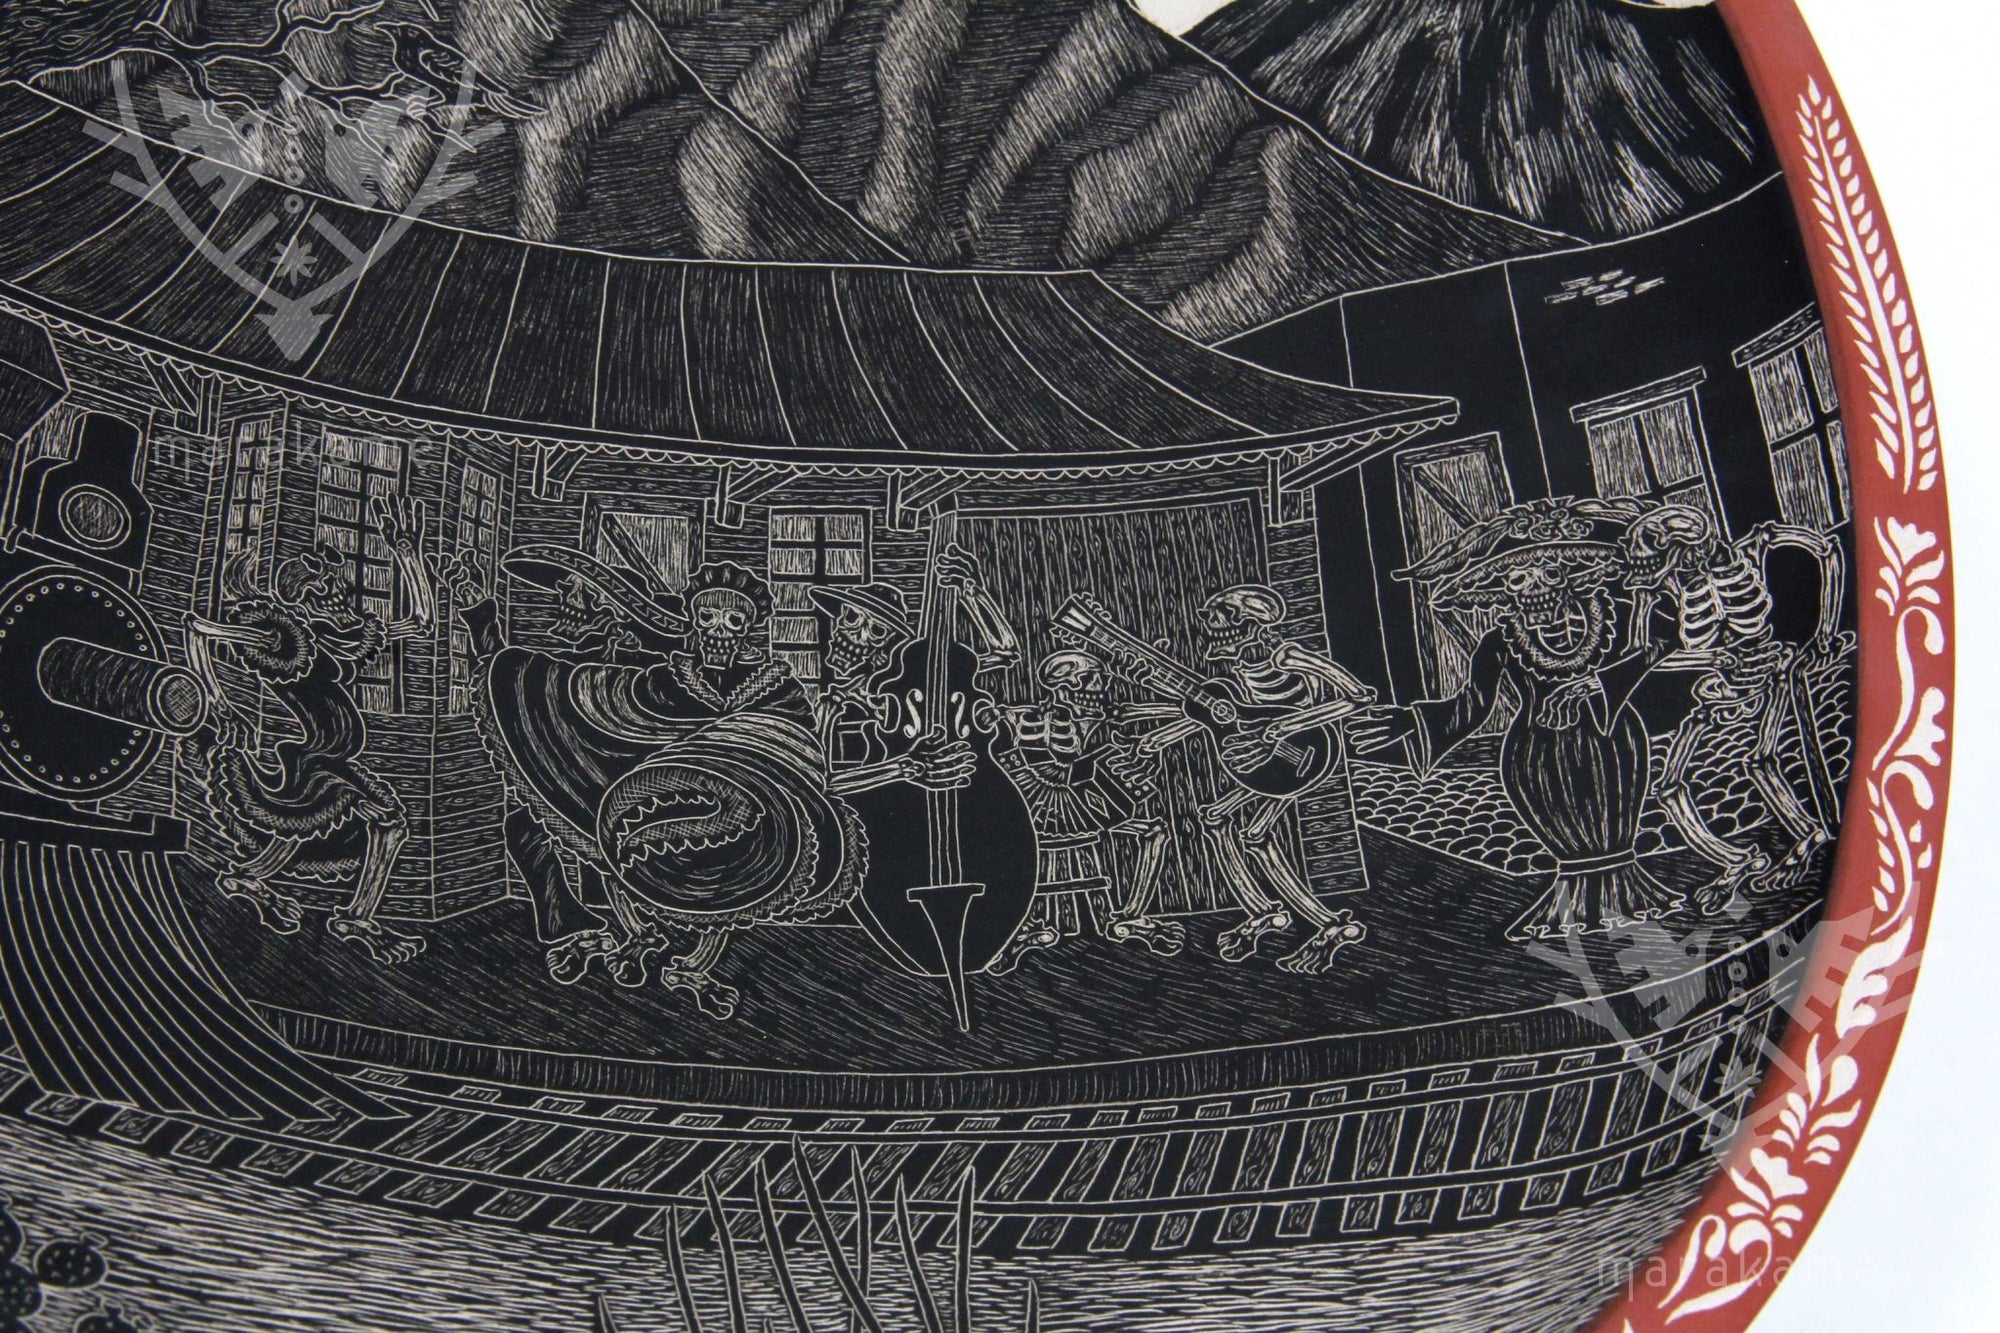 Mata Ortiz Ceramic - Day of the Dead Plate Day Railroad - Huichol Art - Marakame